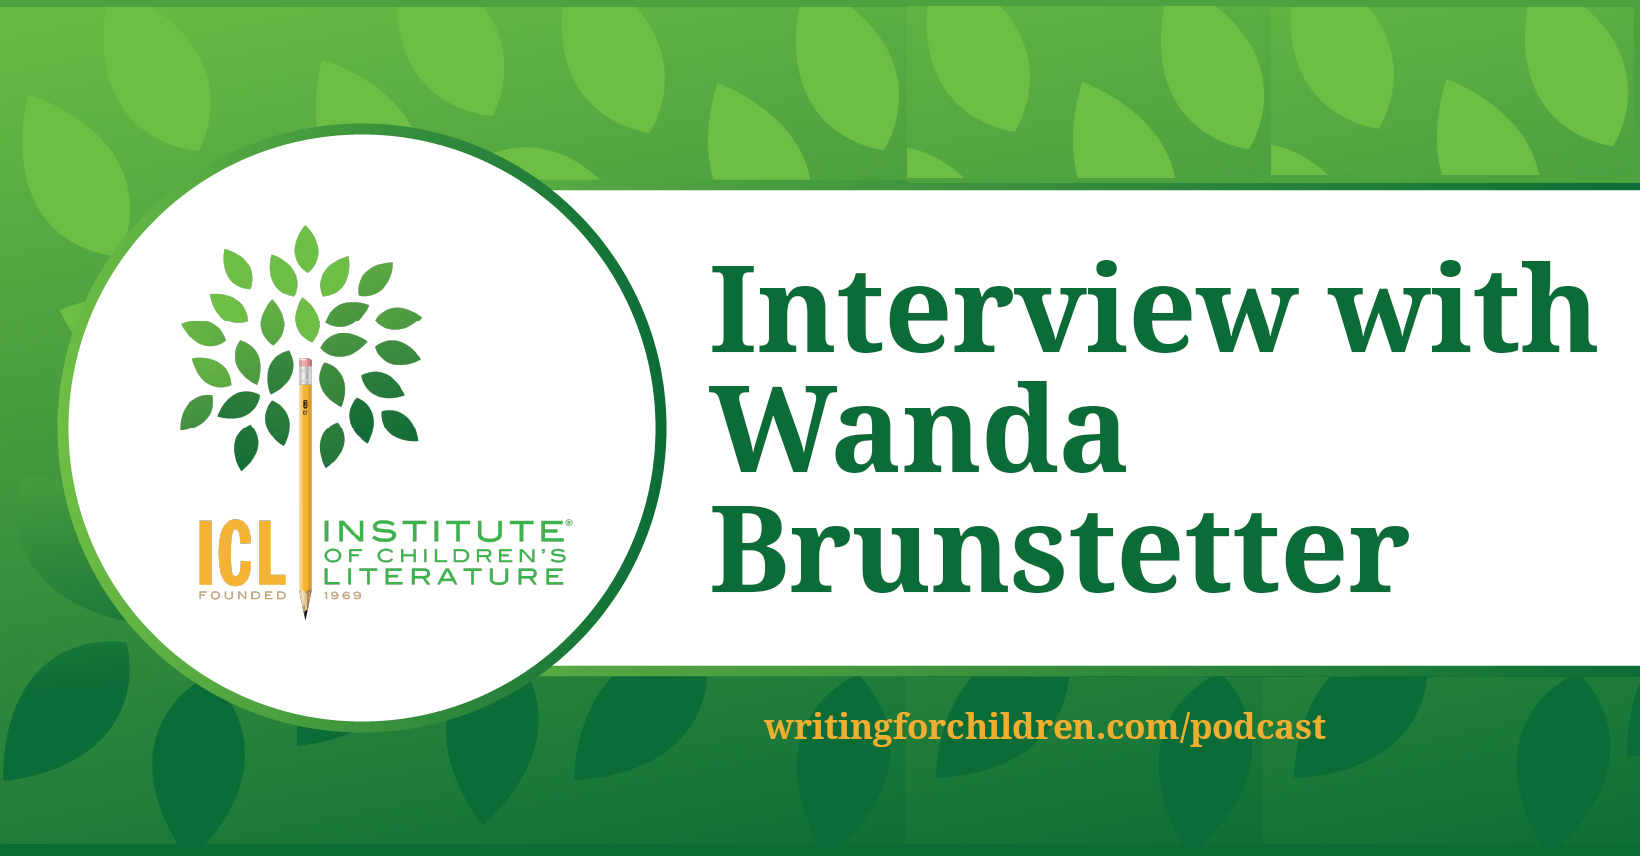 Inerview with Wanda Brunstettar episode 203